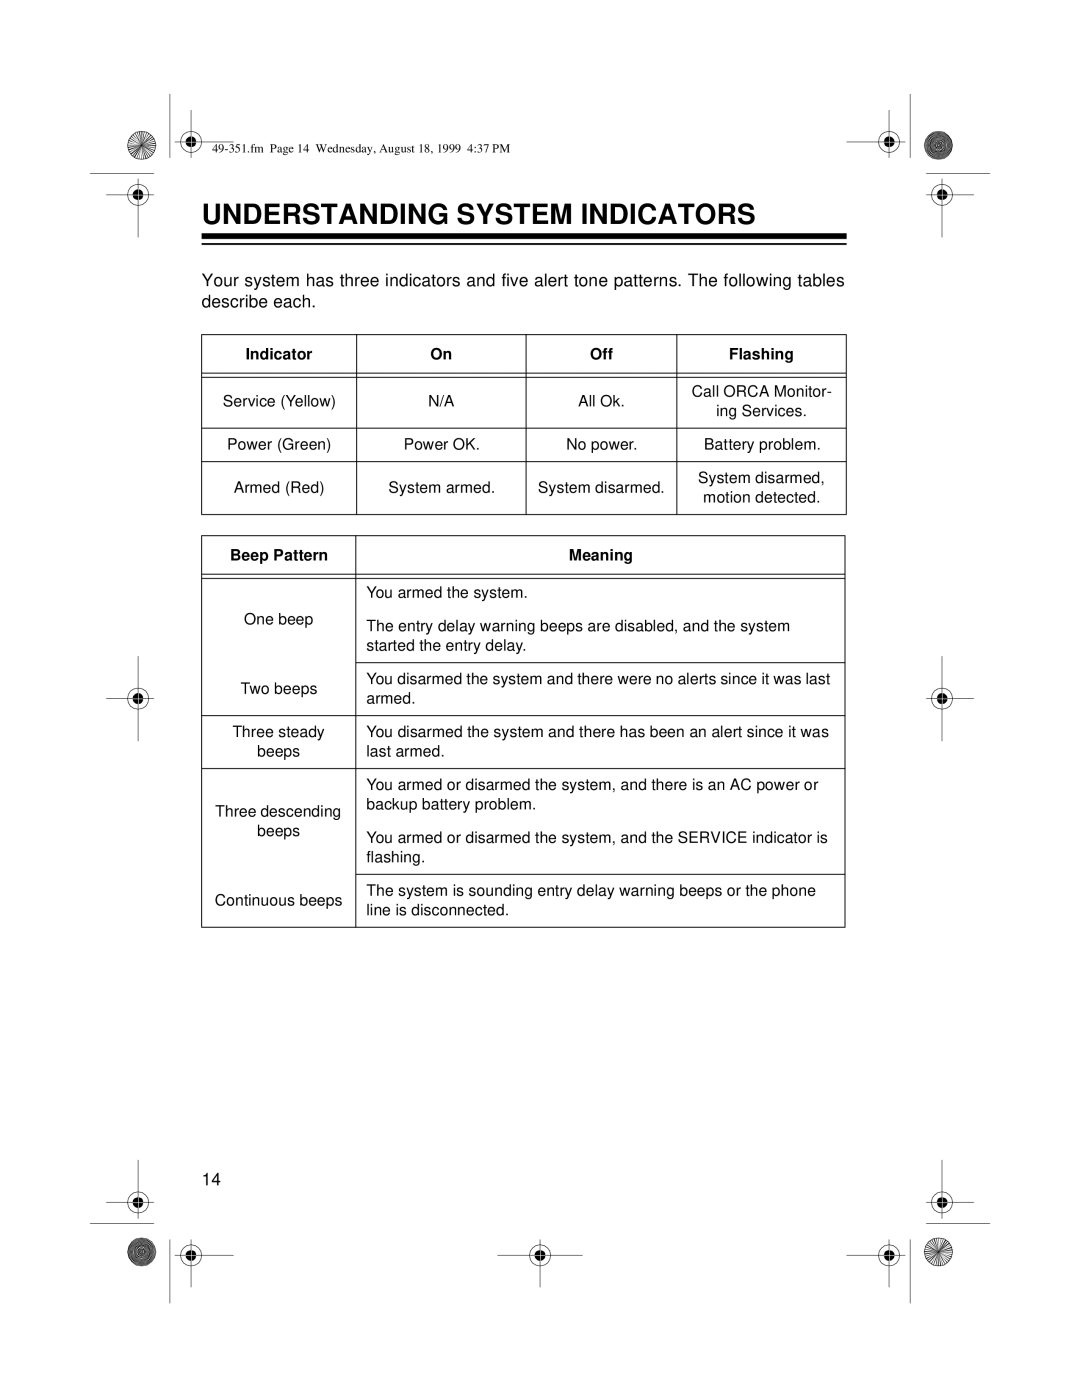 Radio Shack 49-351 owner manual Understanding System Indicators, Flashing, Beep Pattern, Meaning 